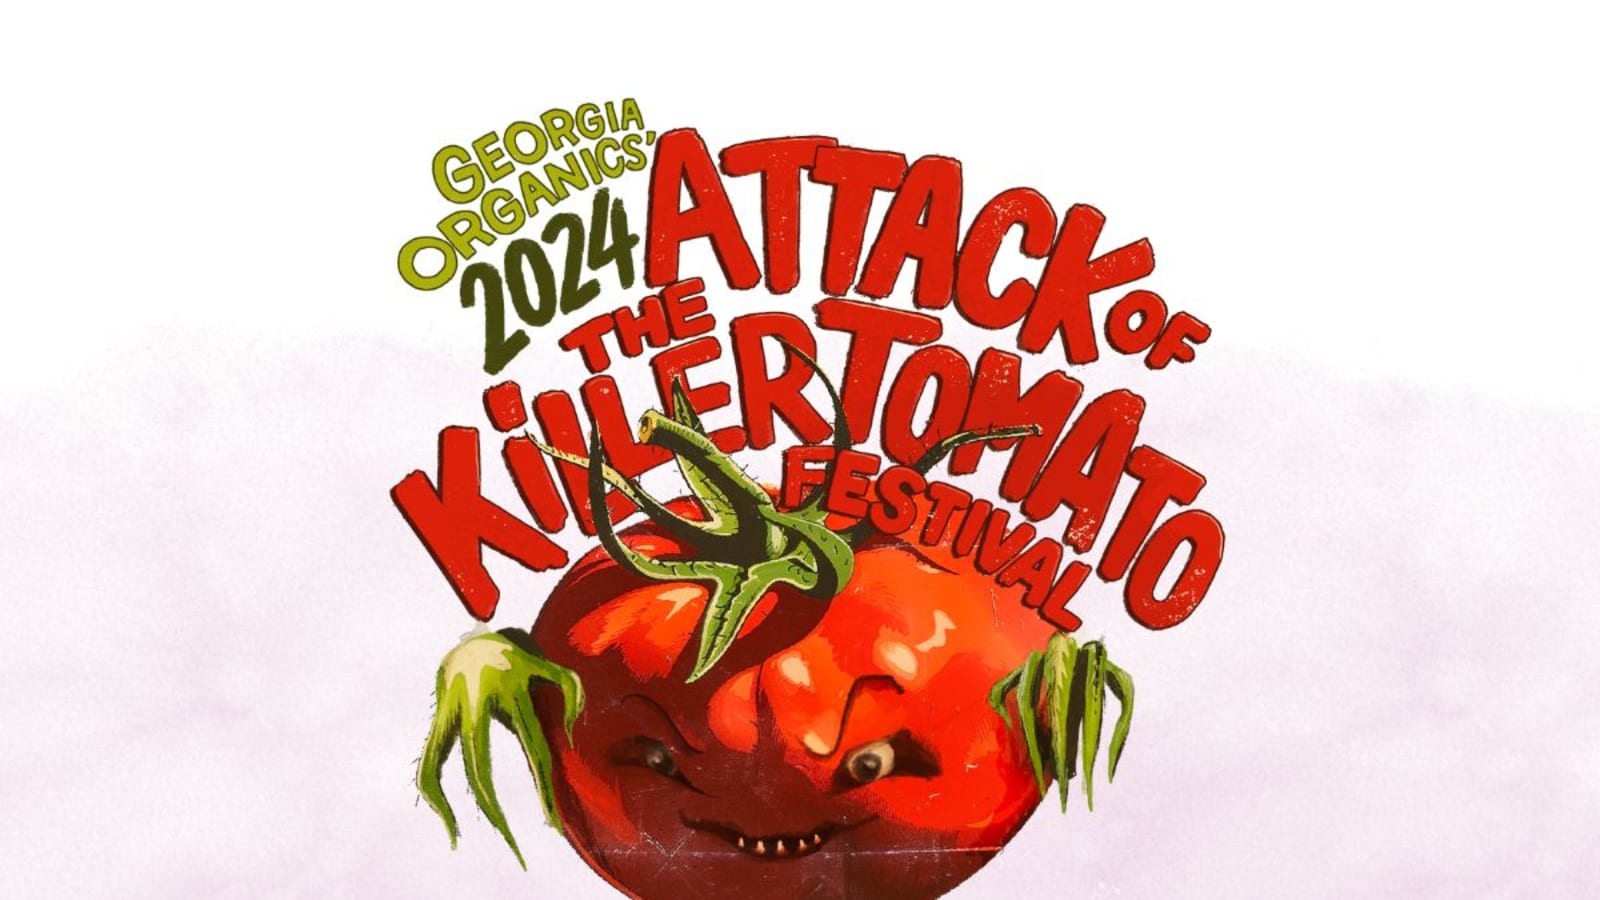 Georgia Organics’ Attack of the Killer Tomato Fest